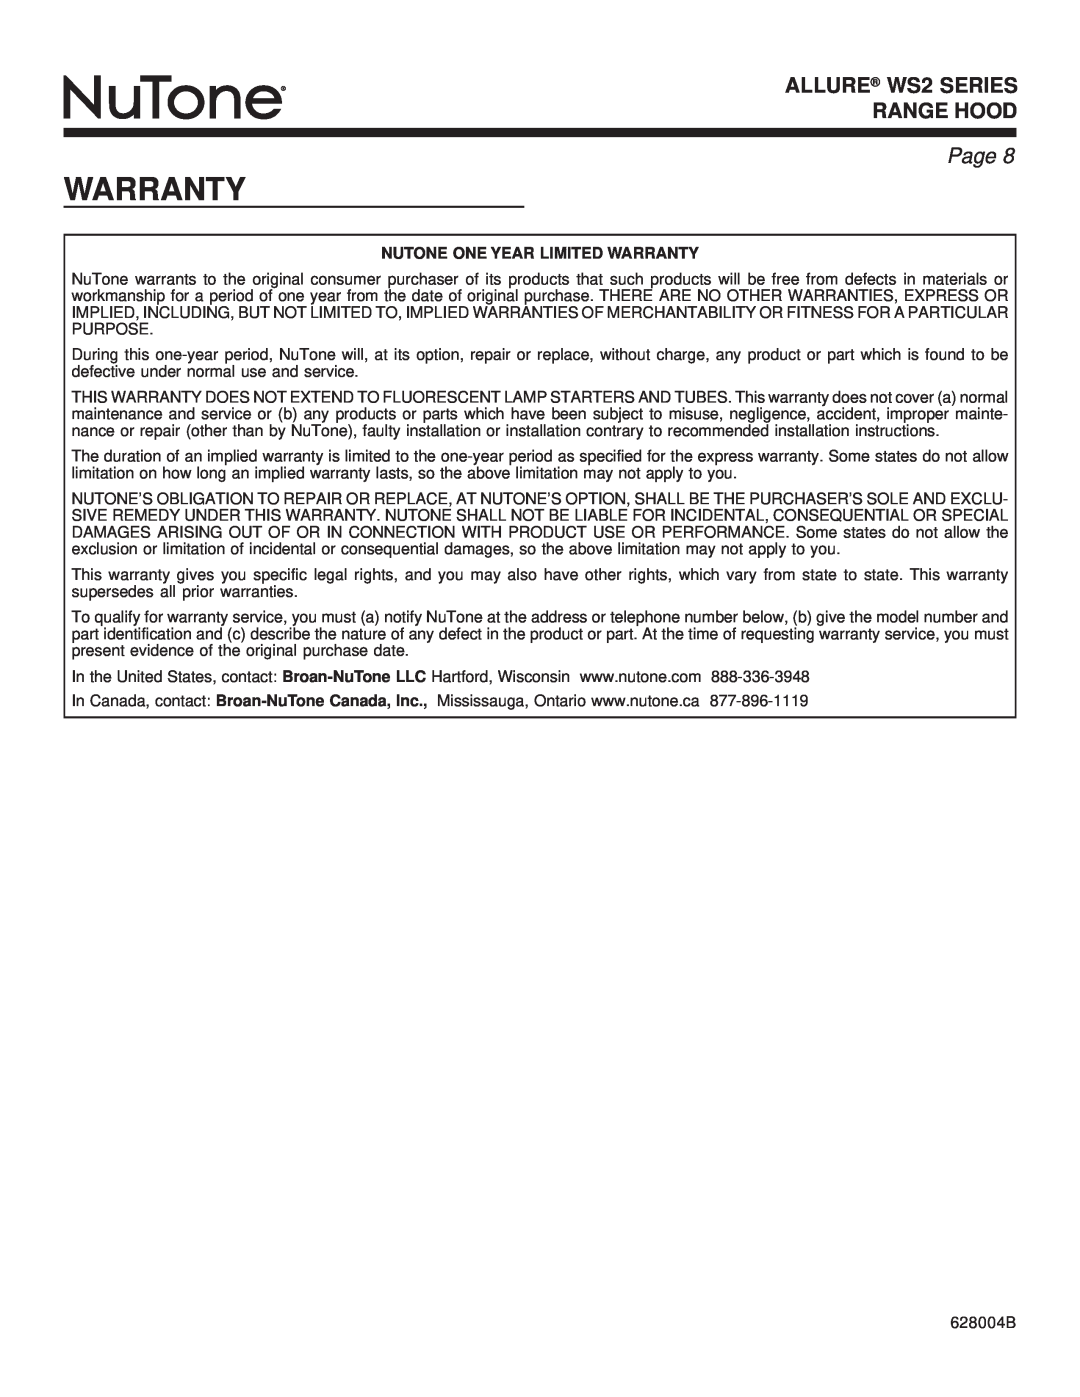 NuTone warranty ALLURE WS2 SERIES RANGE HOOD, Page, Nutone One Year Limited Warranty 